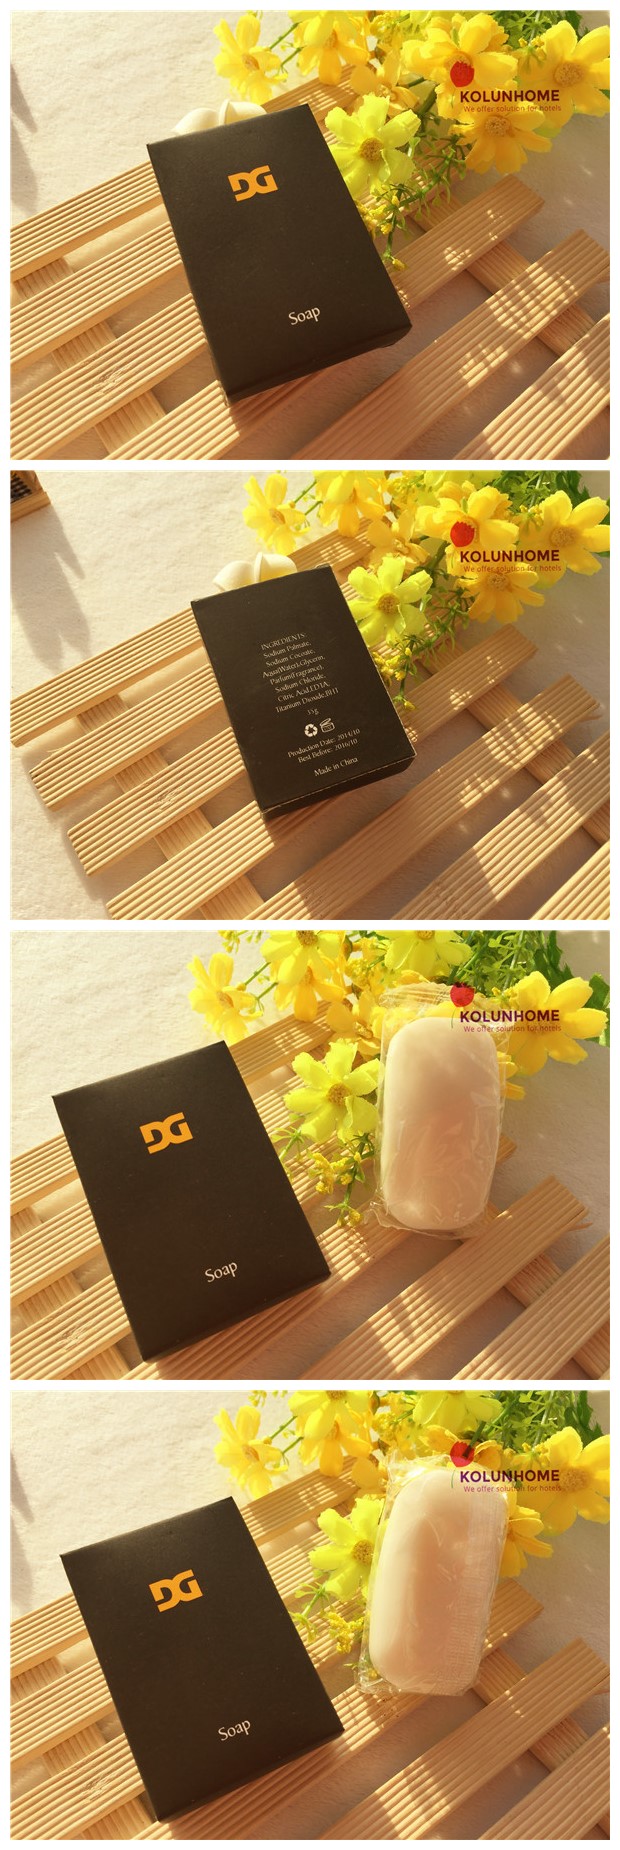 Hotel supplies 35g soap with black carton box